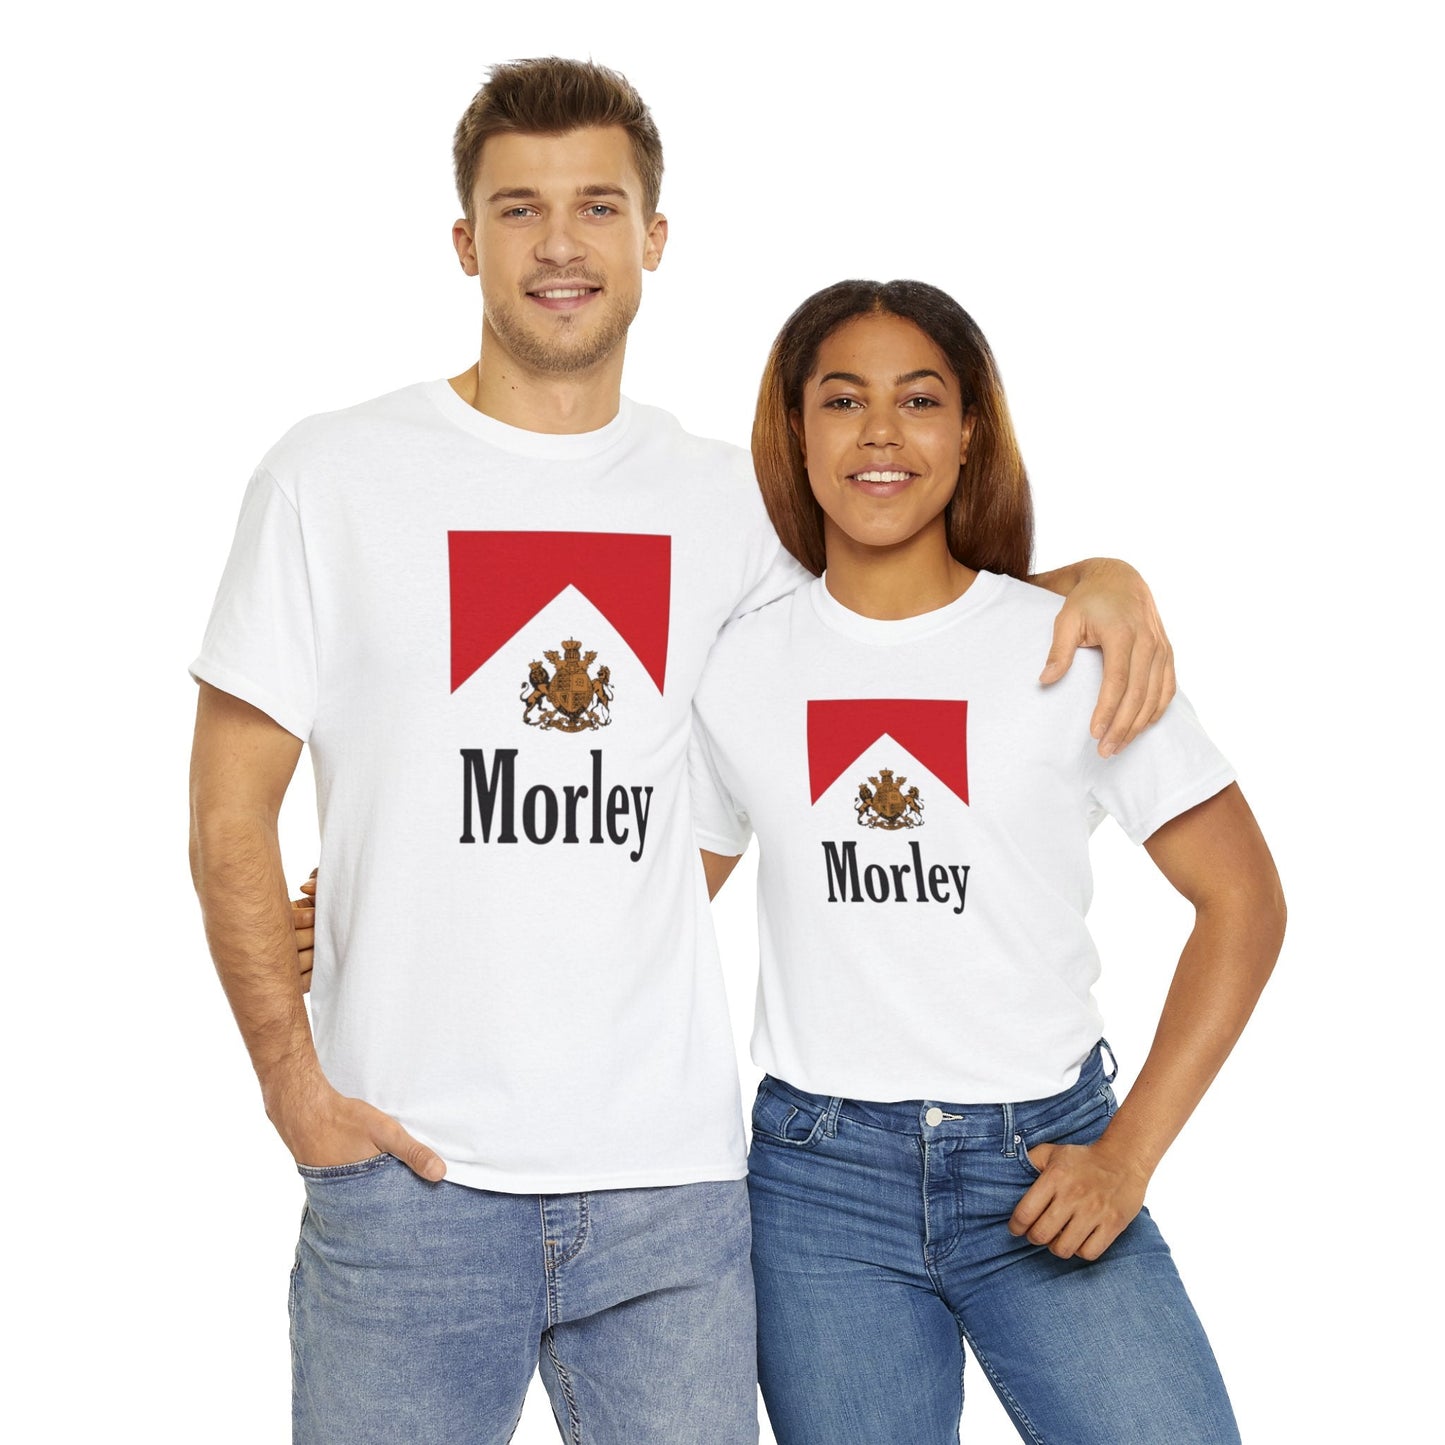 Morley Cigarettes Logo T-Shirt - Fictional Brand- X Files & Breaking Bad